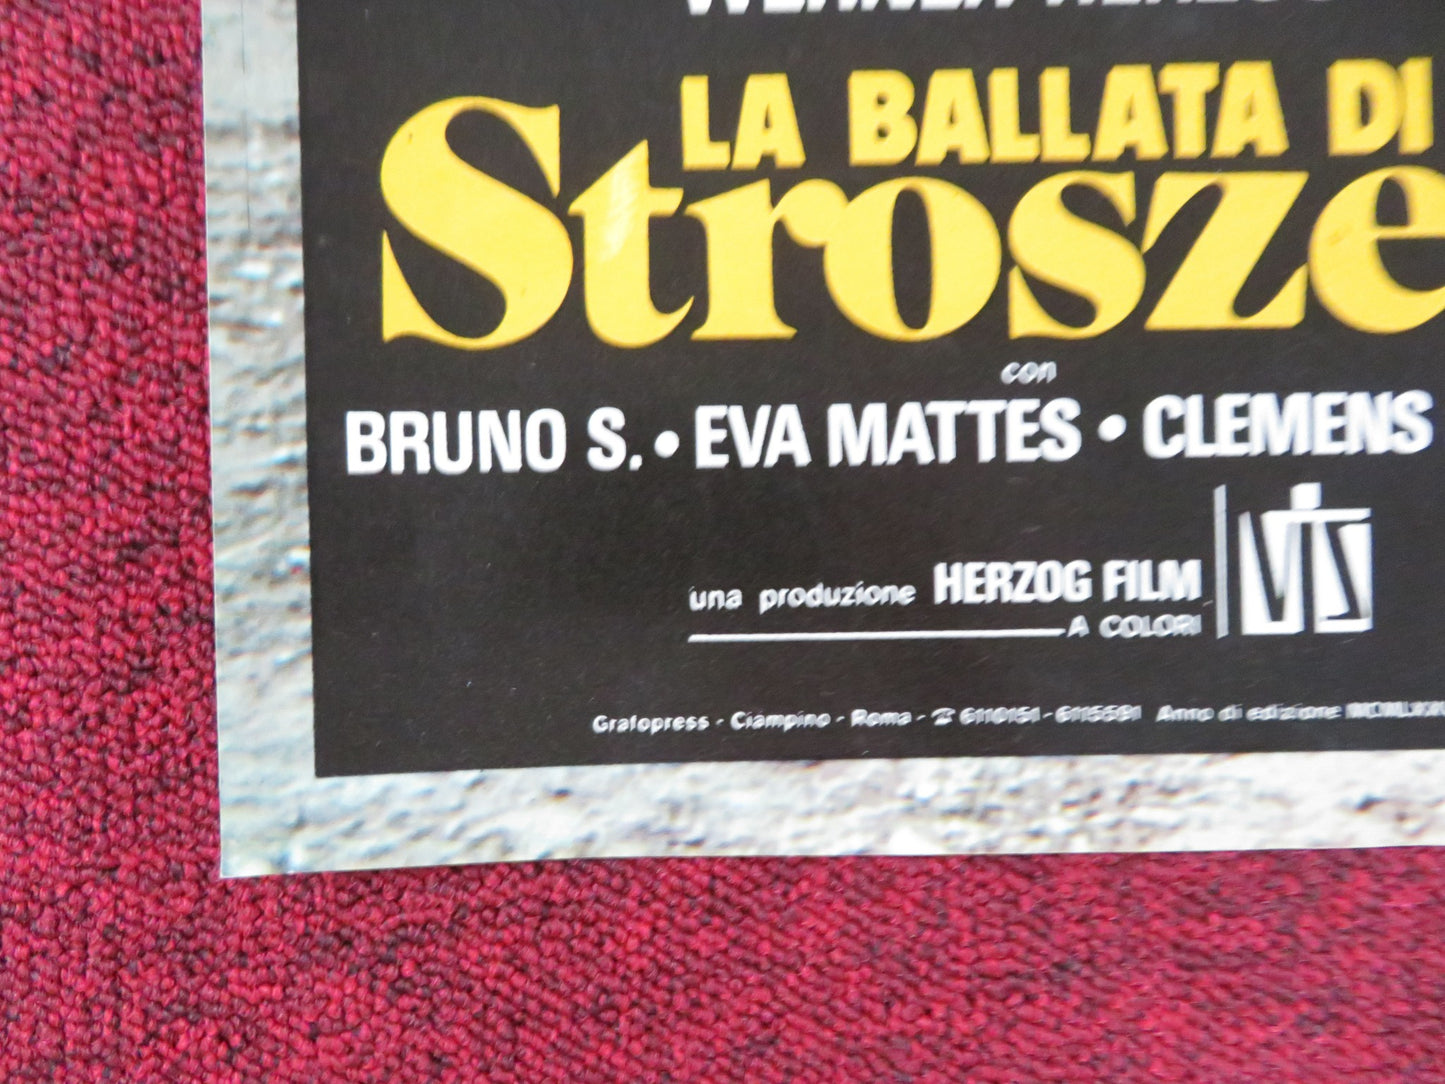 STROSZEK - F ITALIAN FOTOBUSTA POSTER BRUNO S. EVA MATTES 1977